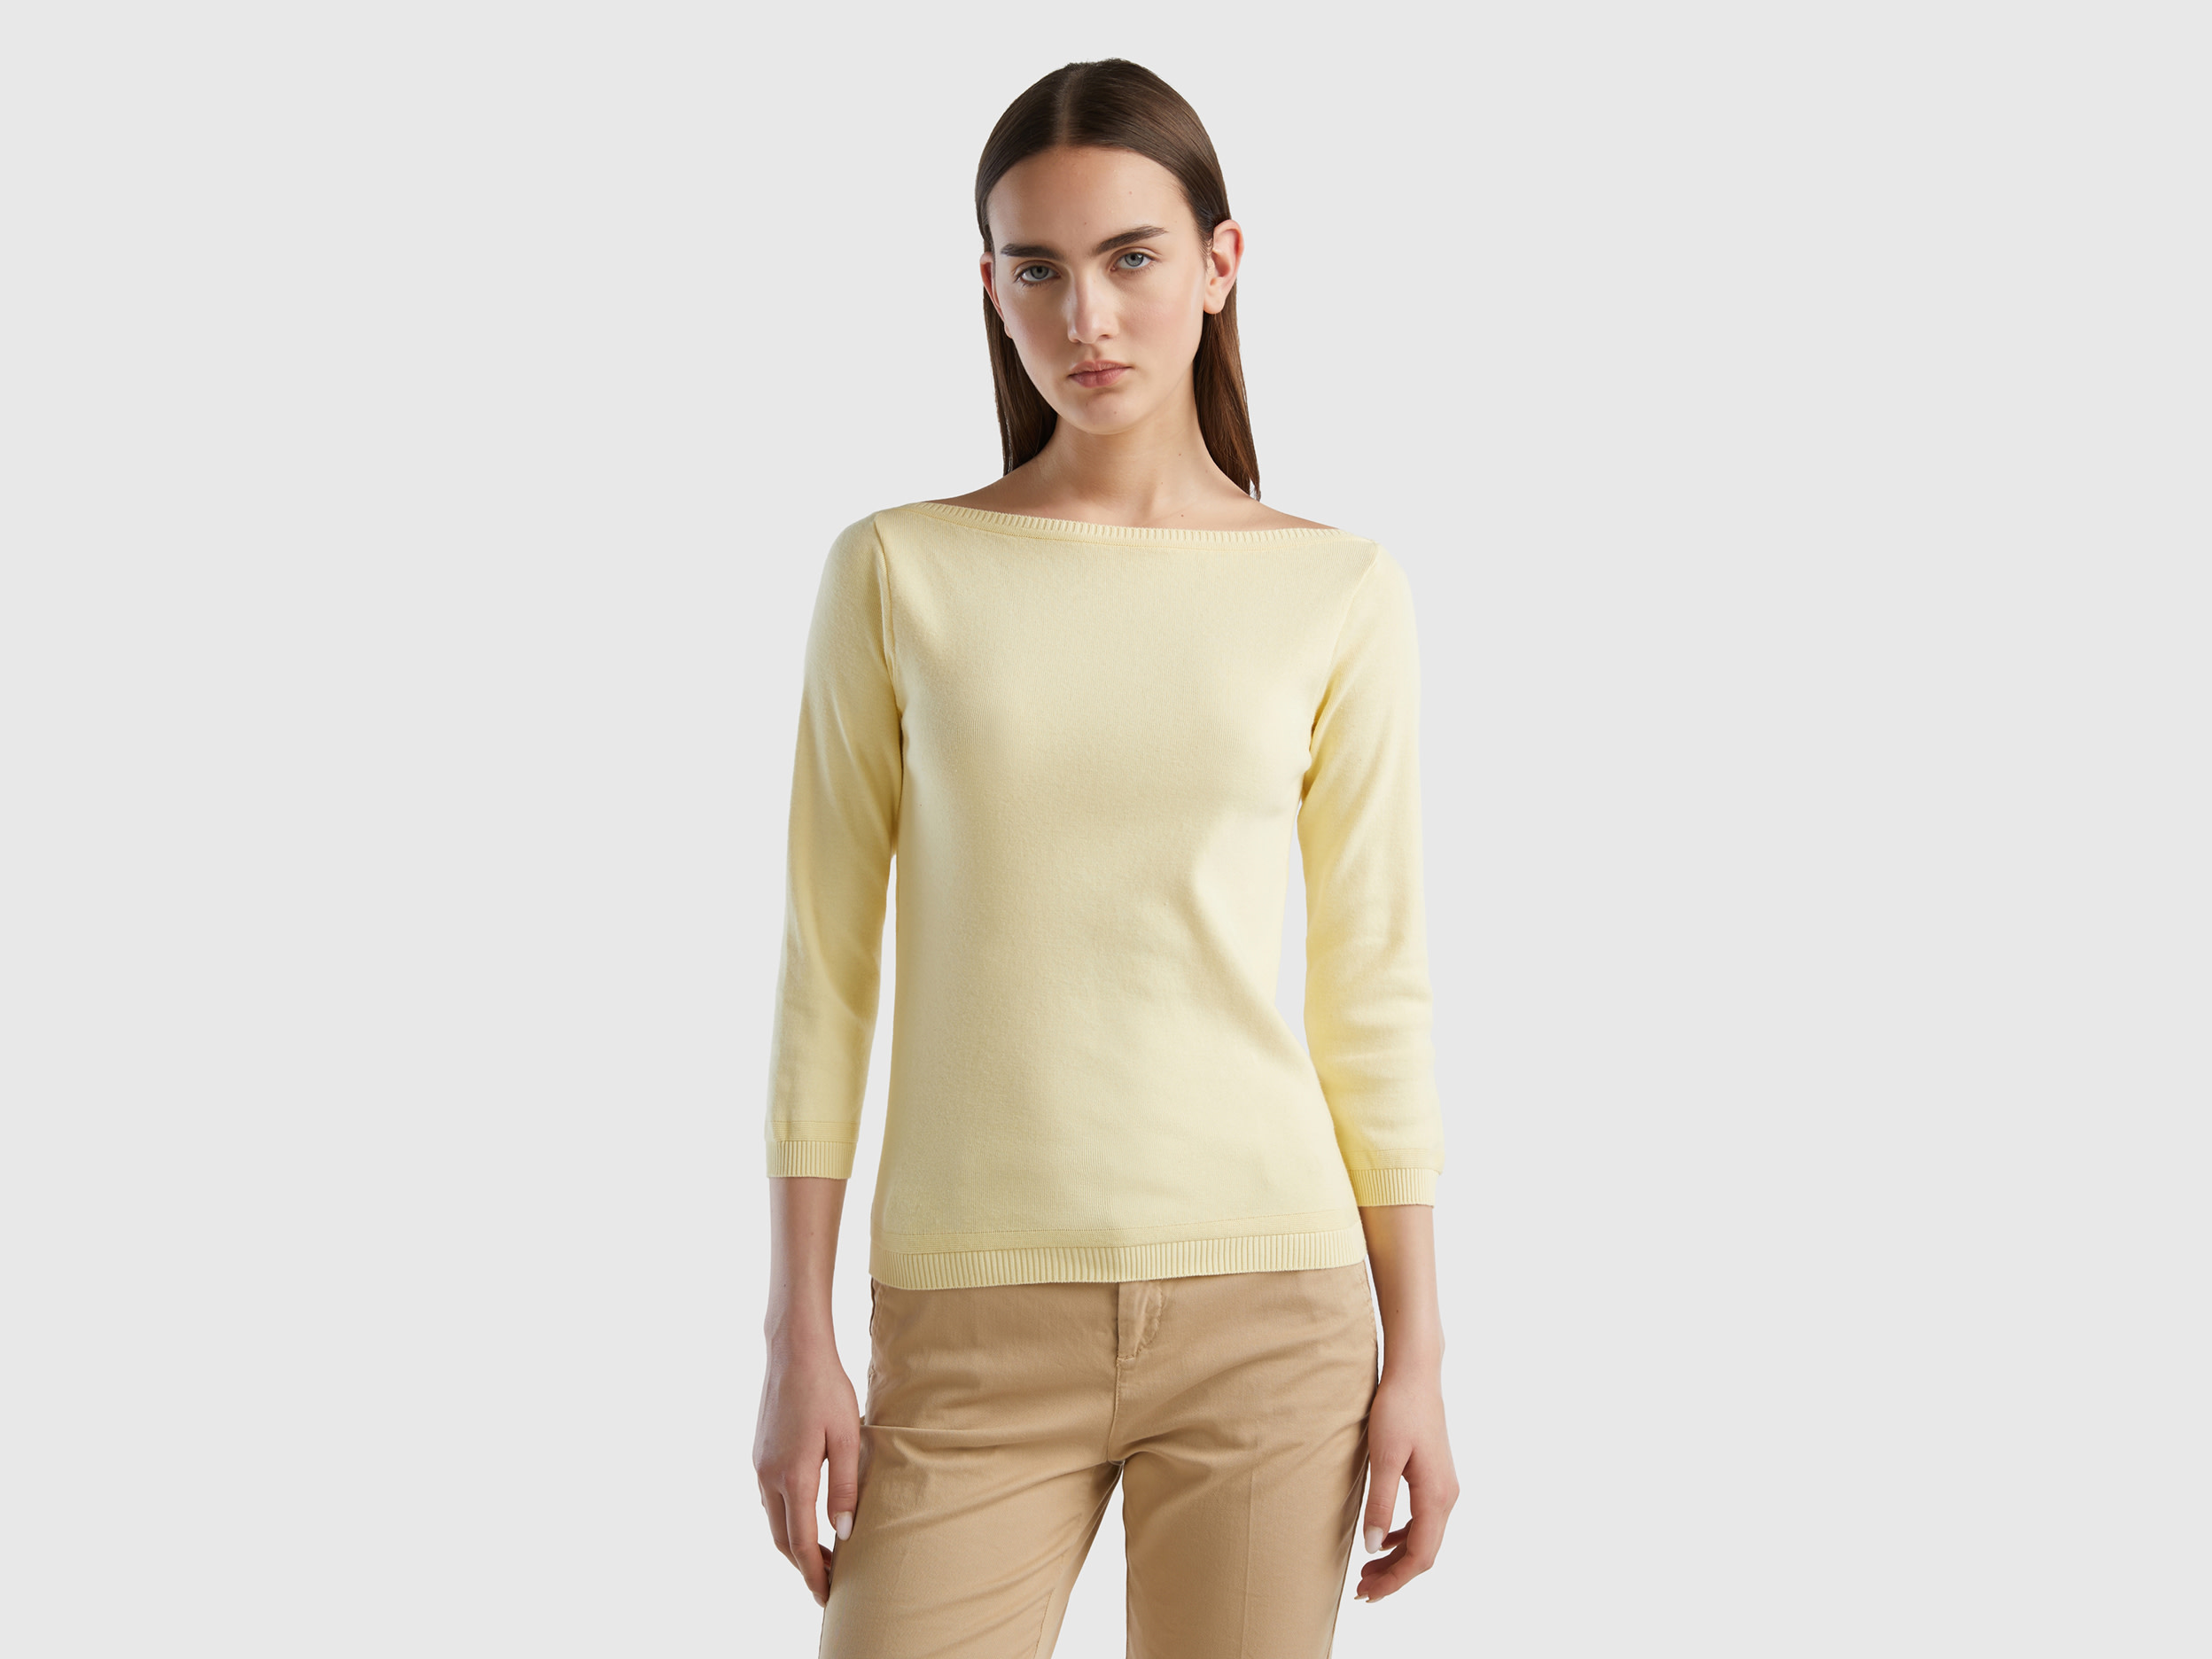 Benetton, 100% Cotton Boat Neck Sweater, size M, Yellow, Women